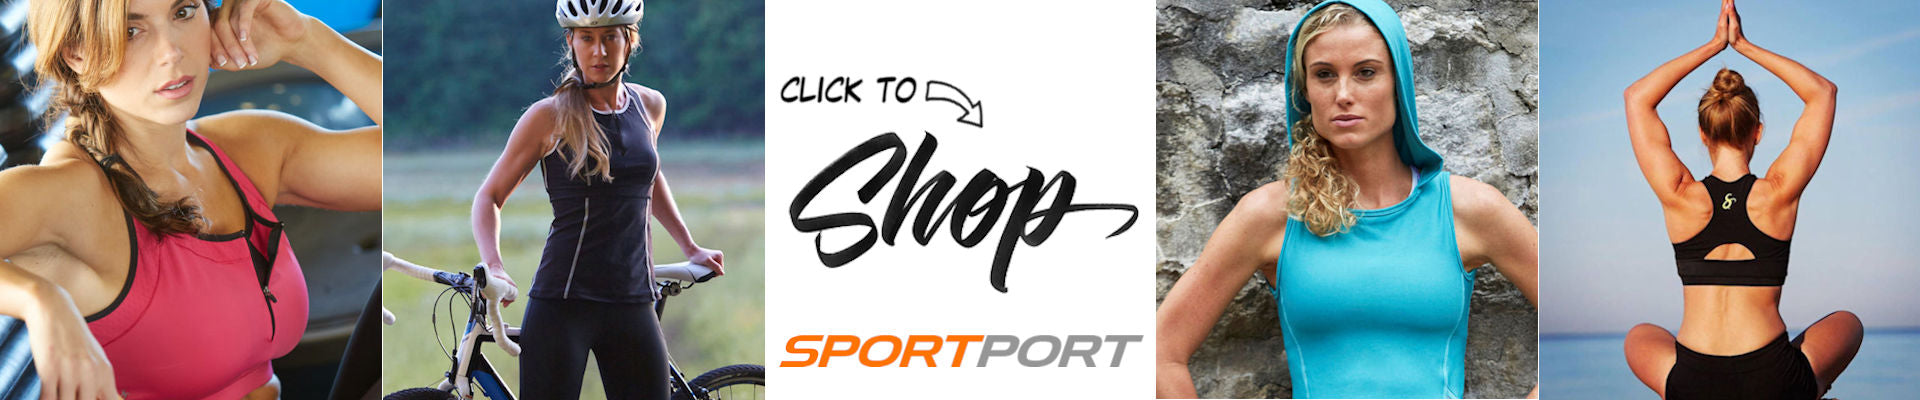 sportport womens activewear shop